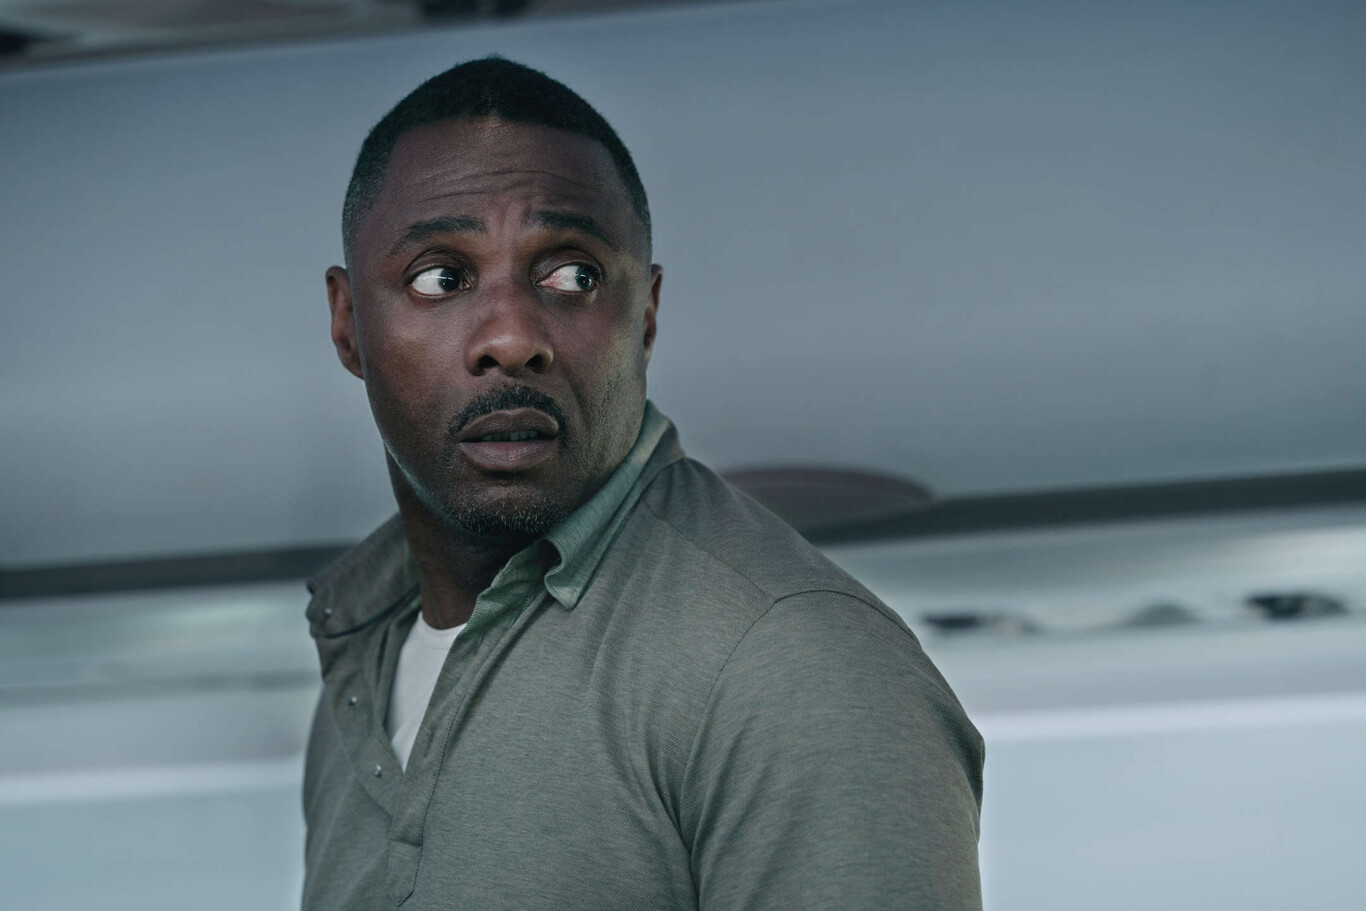 “Casi pierdo la vida”: Idris Elba recuerda fuerte episodio